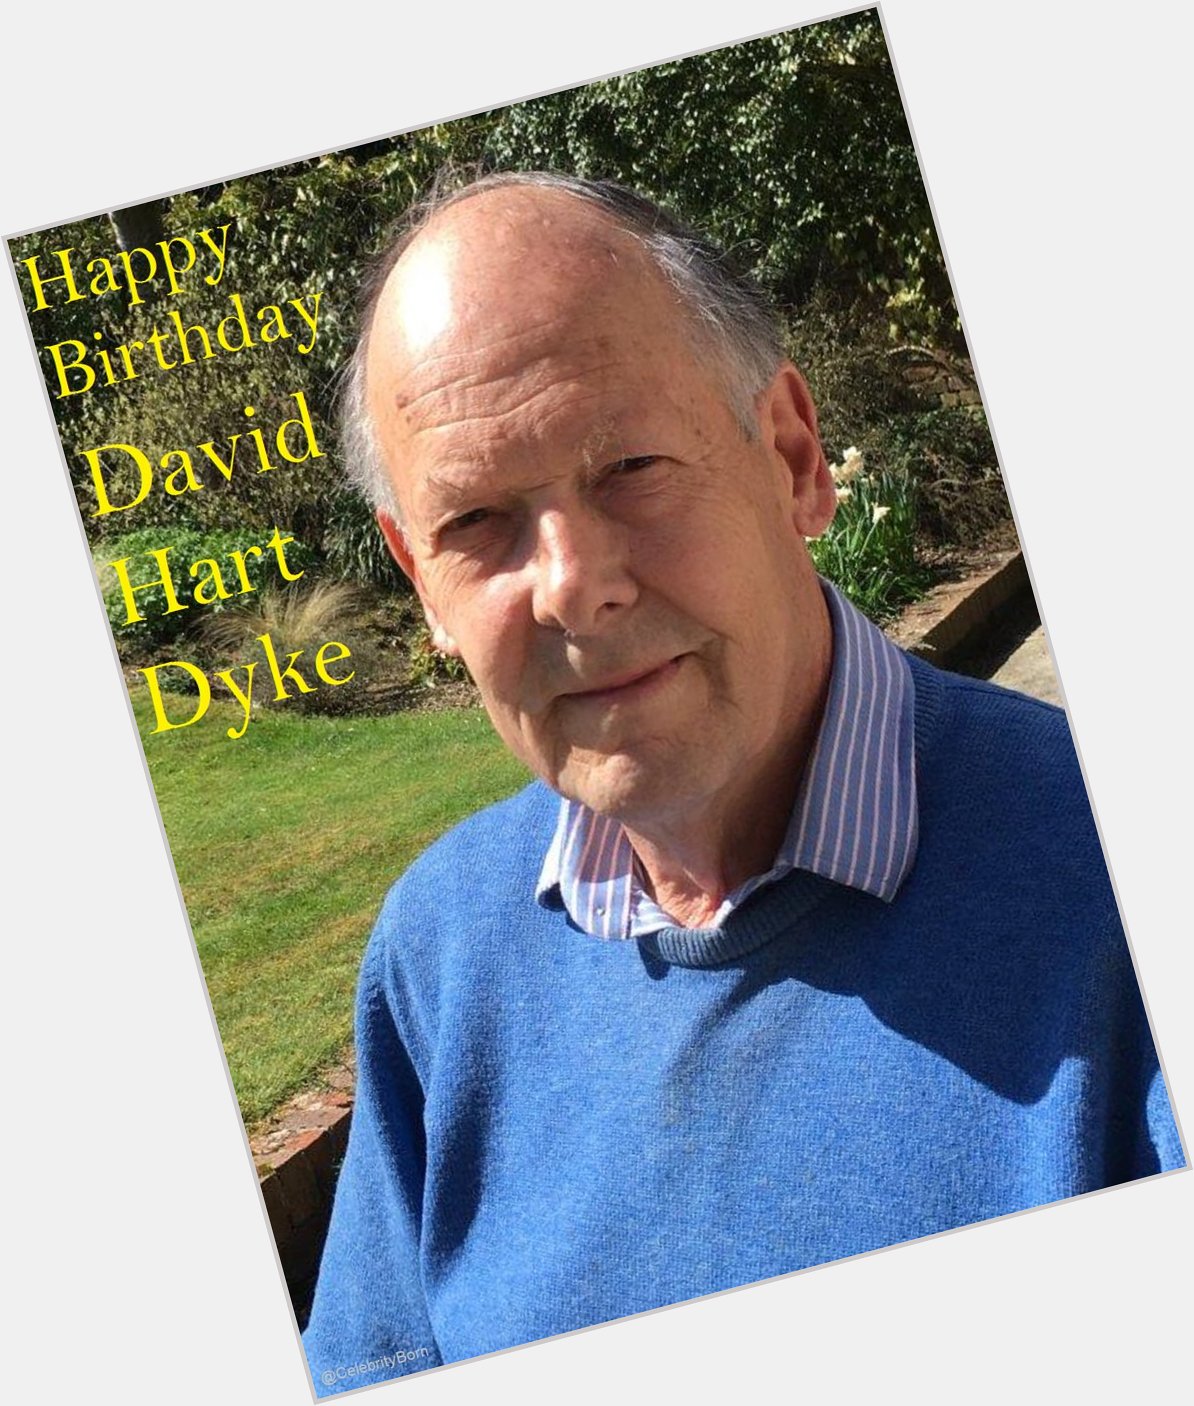 Happy Birthday David Hart Dyke (Navy Officer) 